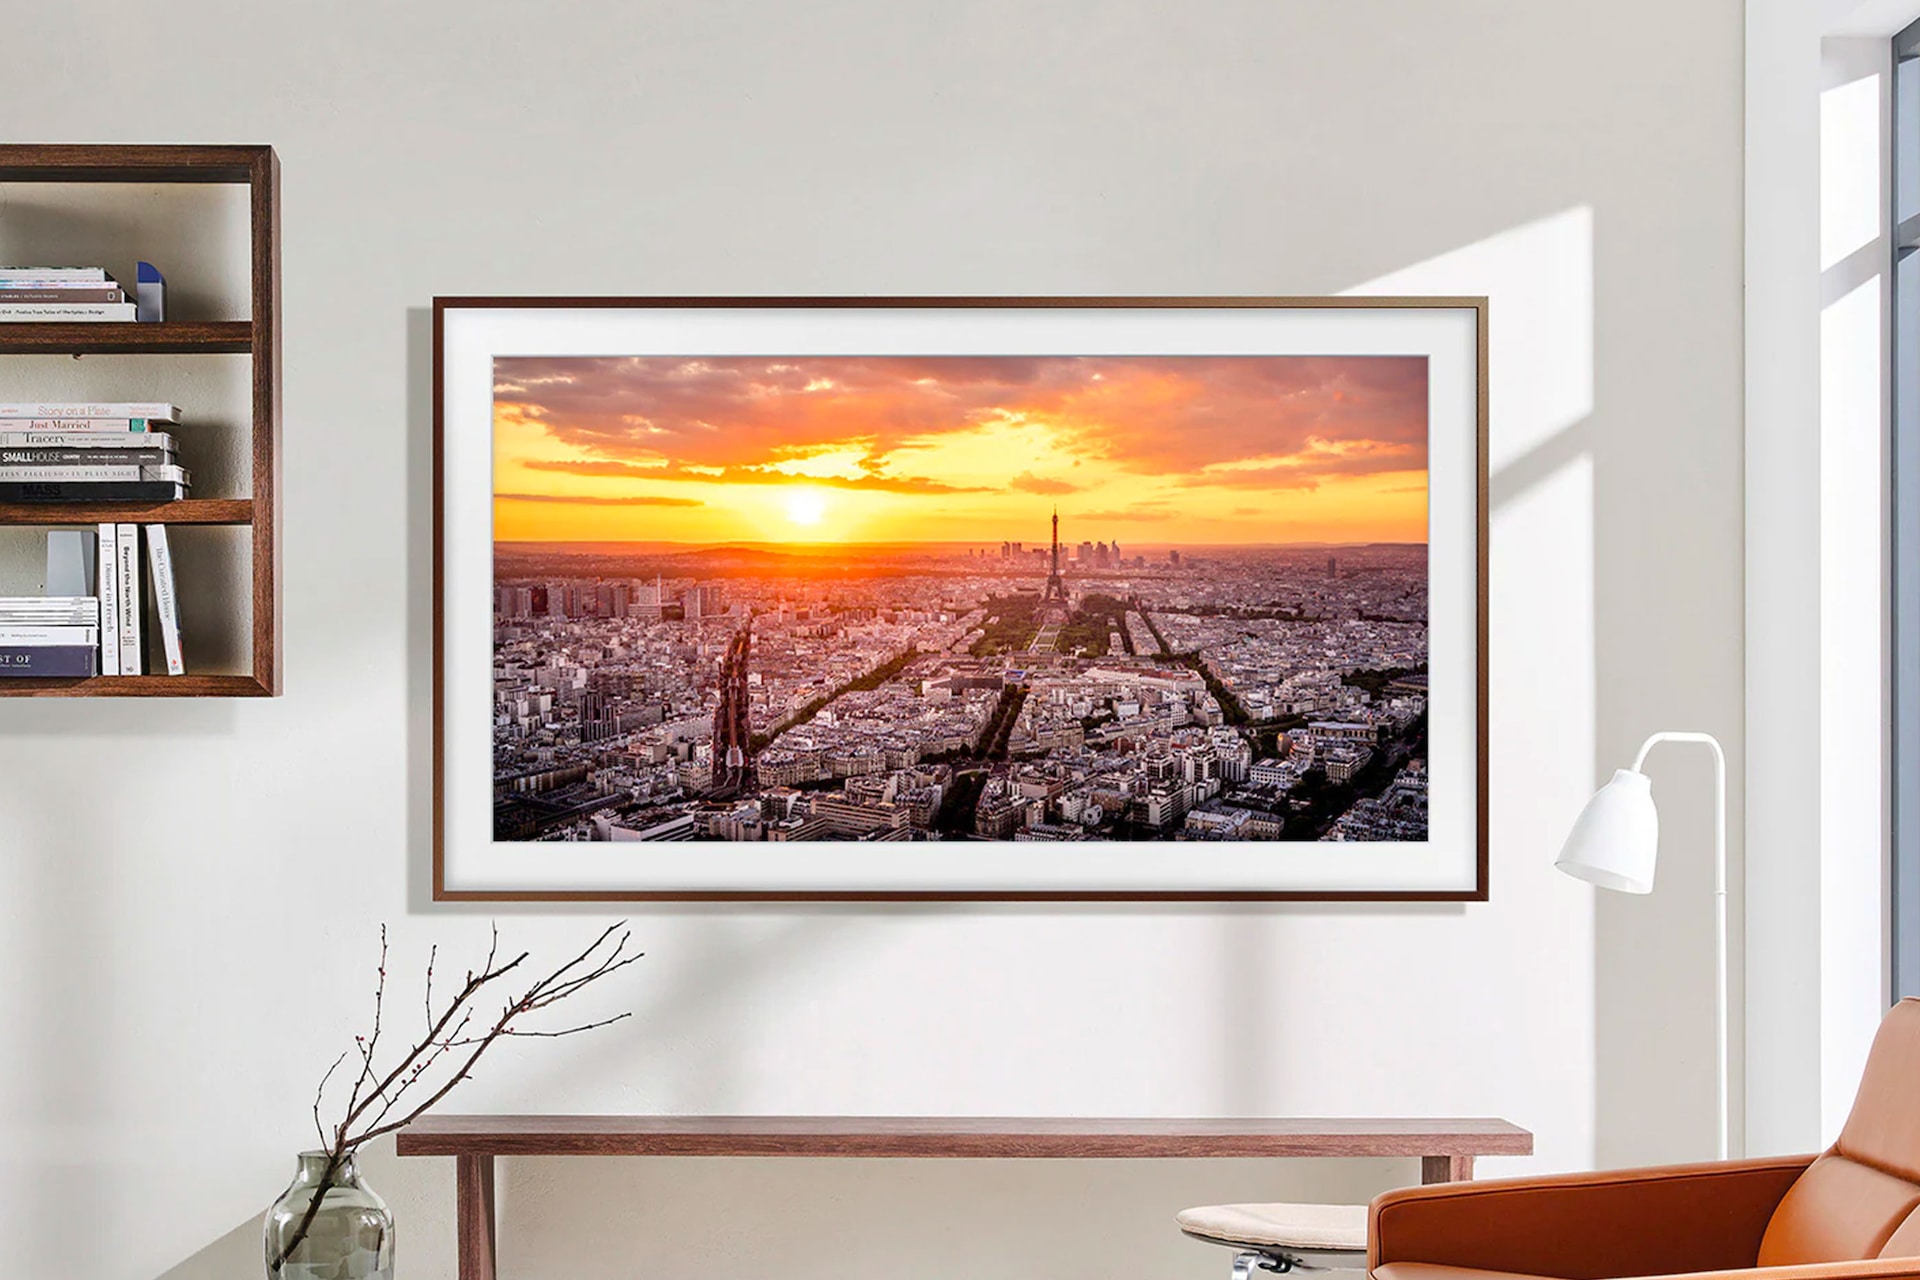 50 The Frame Art Mode QLED 4K HDR Smart TV (2022)